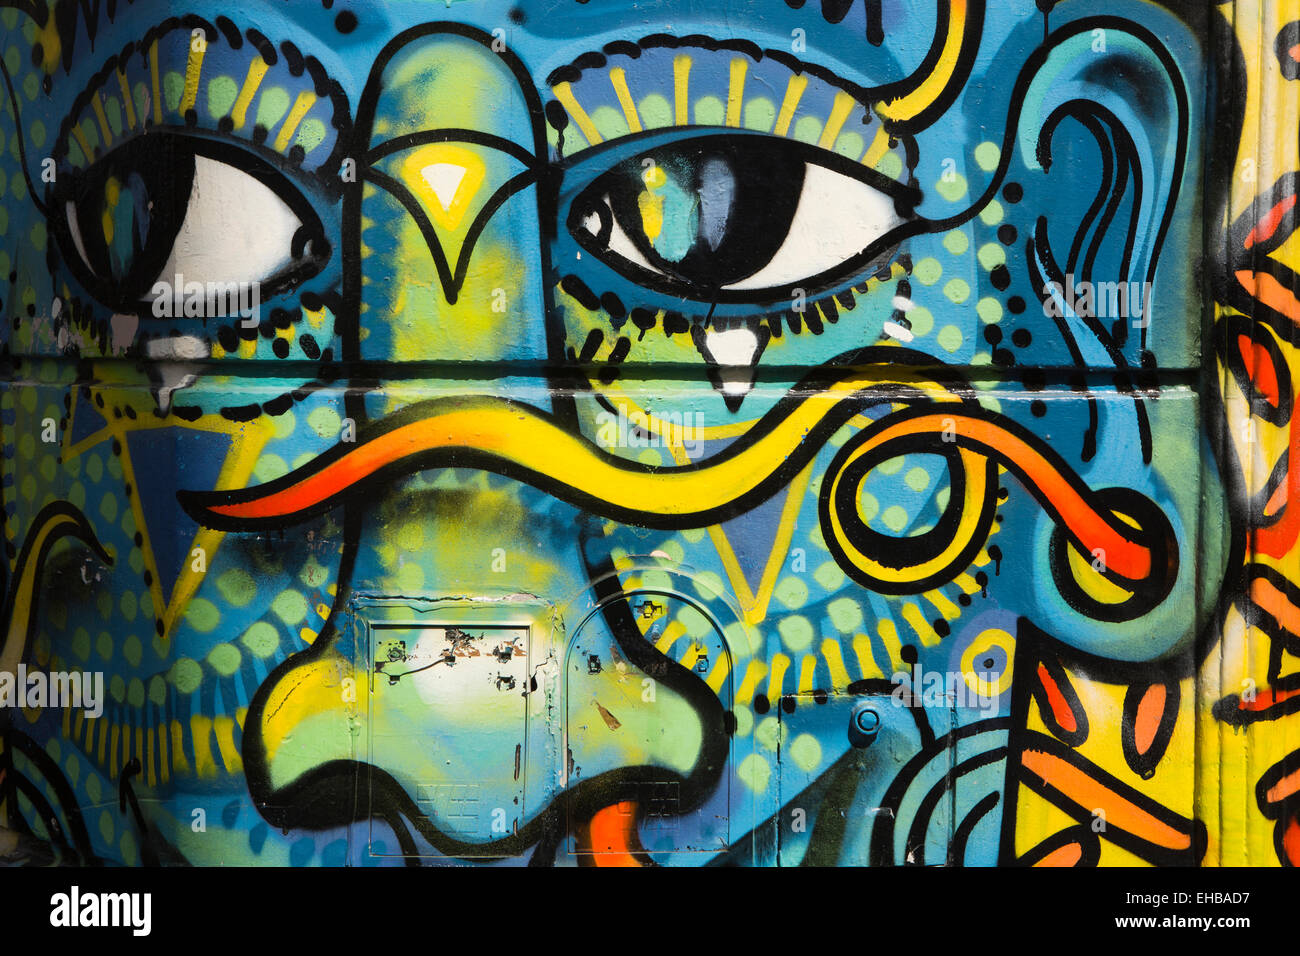 Argentina, Buenos Aires, San Telmo, Defensa, face graffiti on house wall Stock Photo